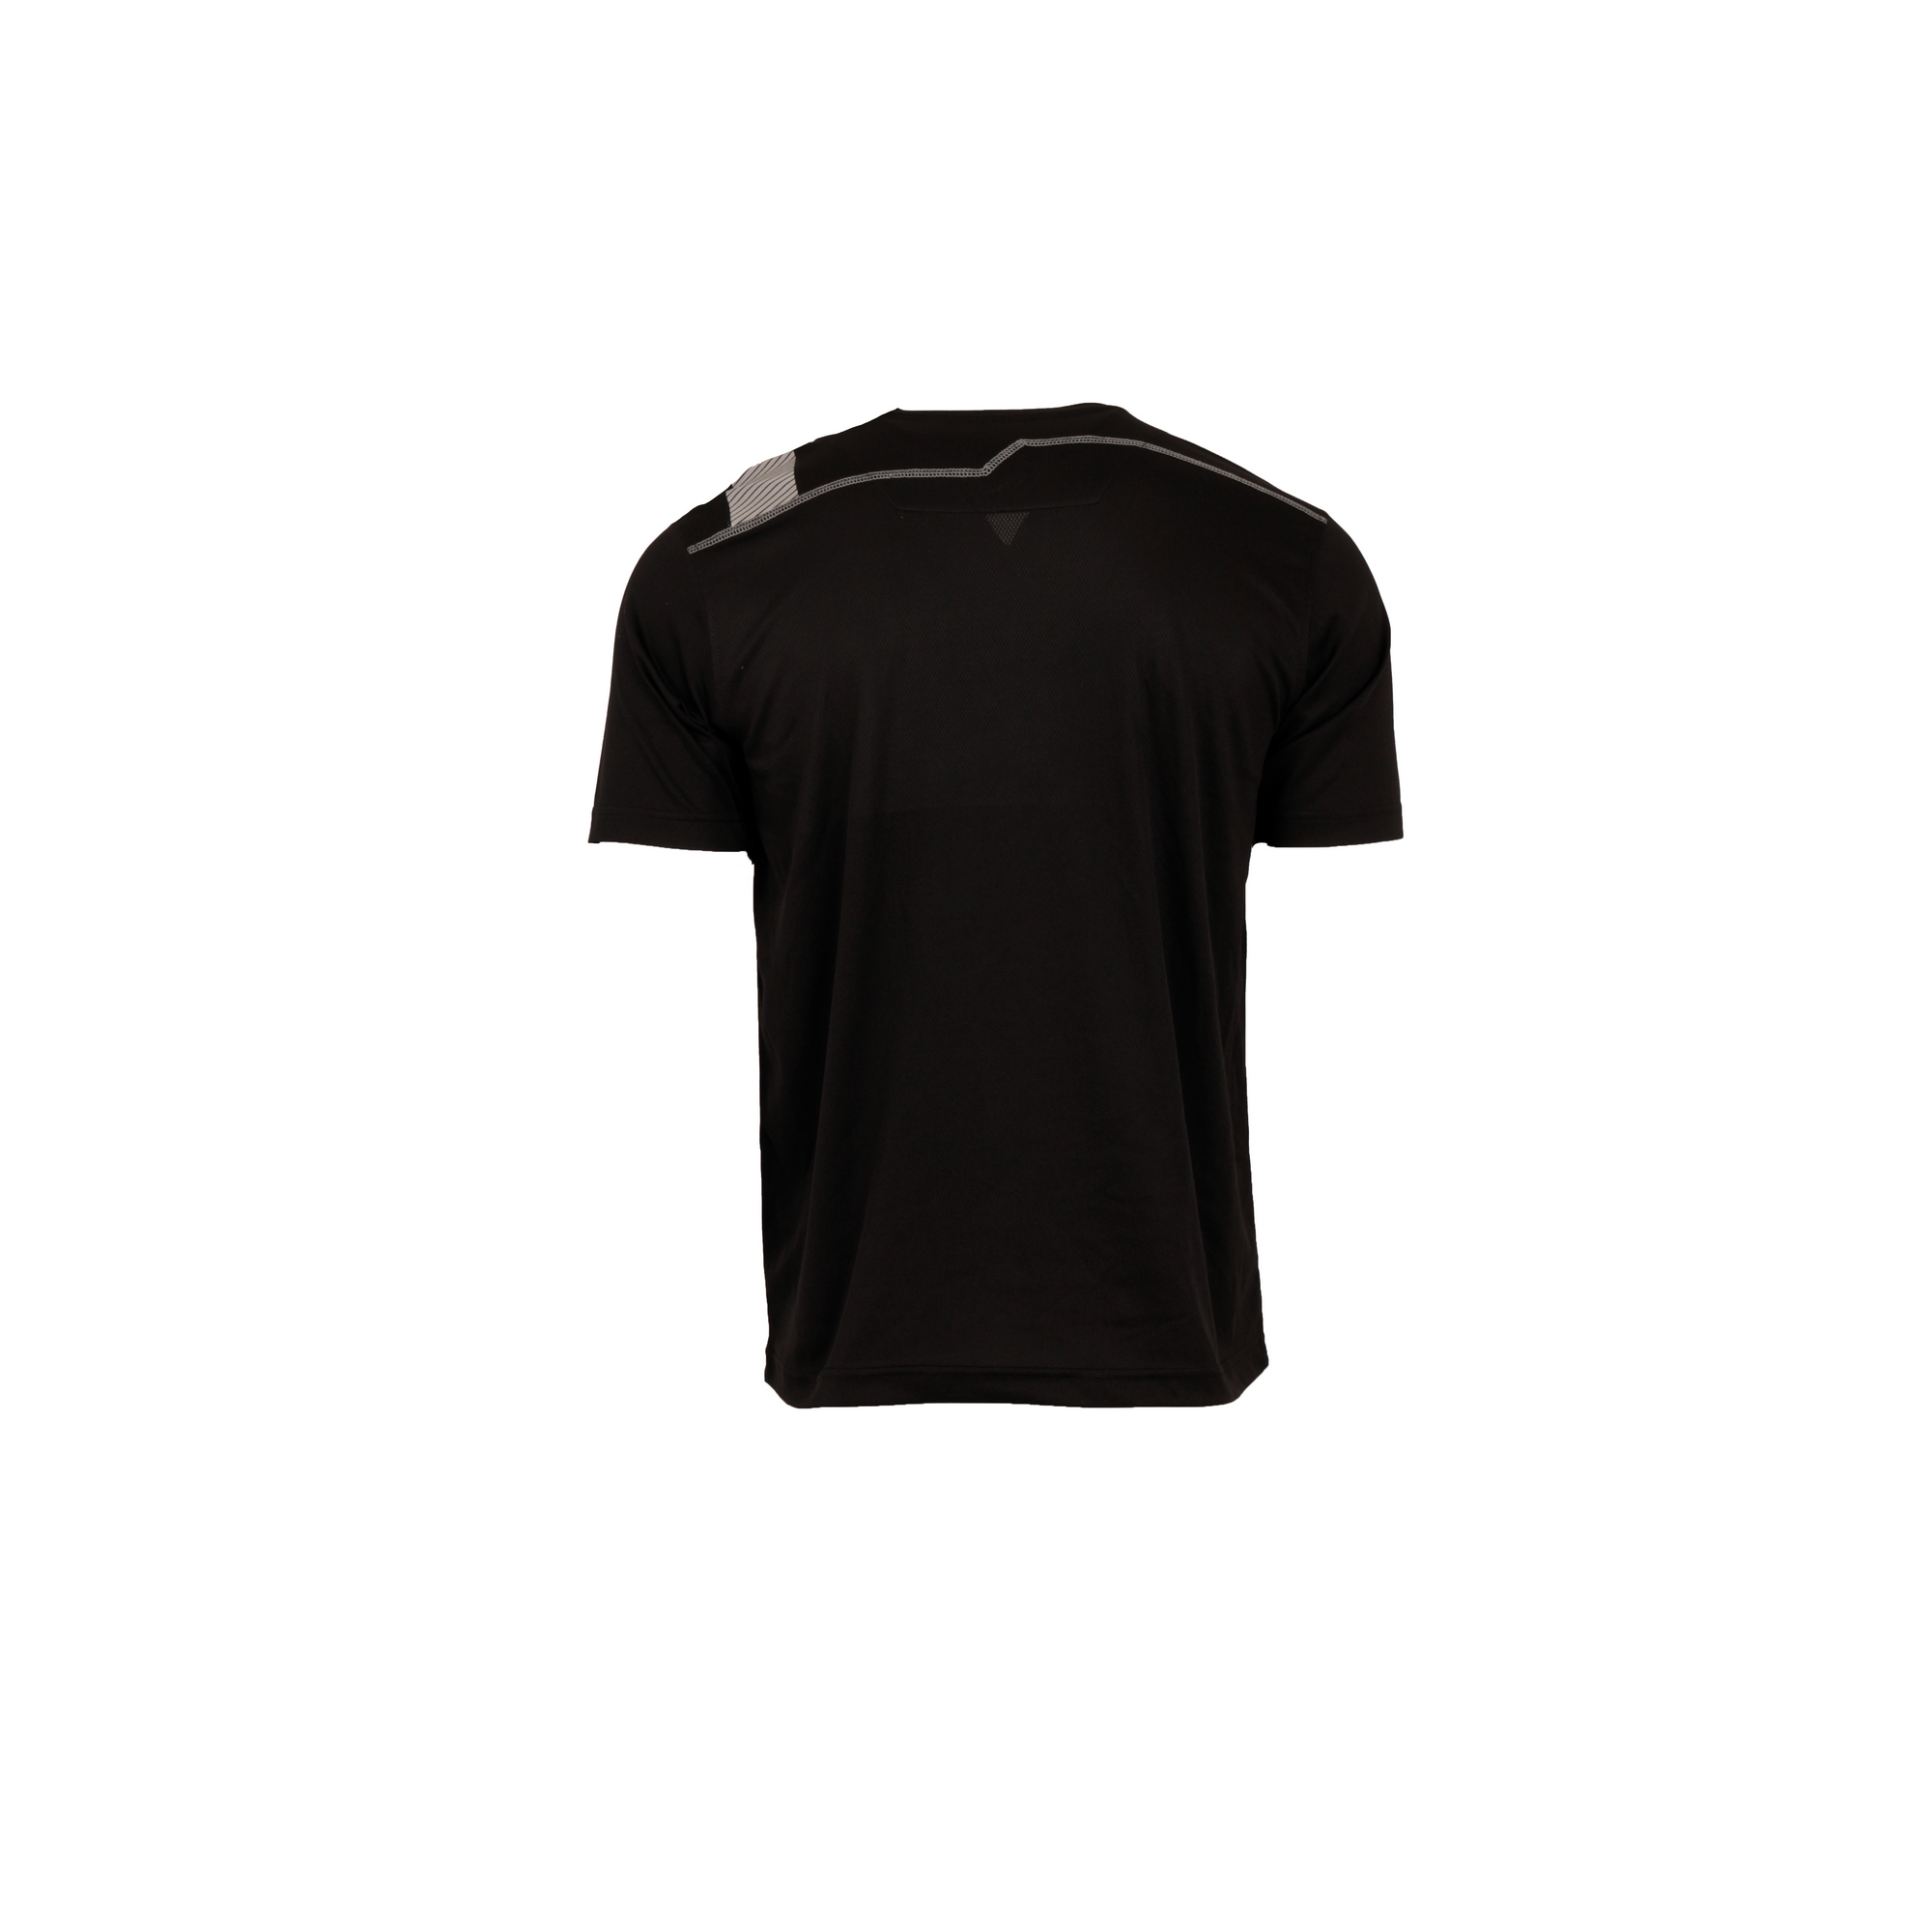 T-Shirt 'Taurus' schwarz M + product picture